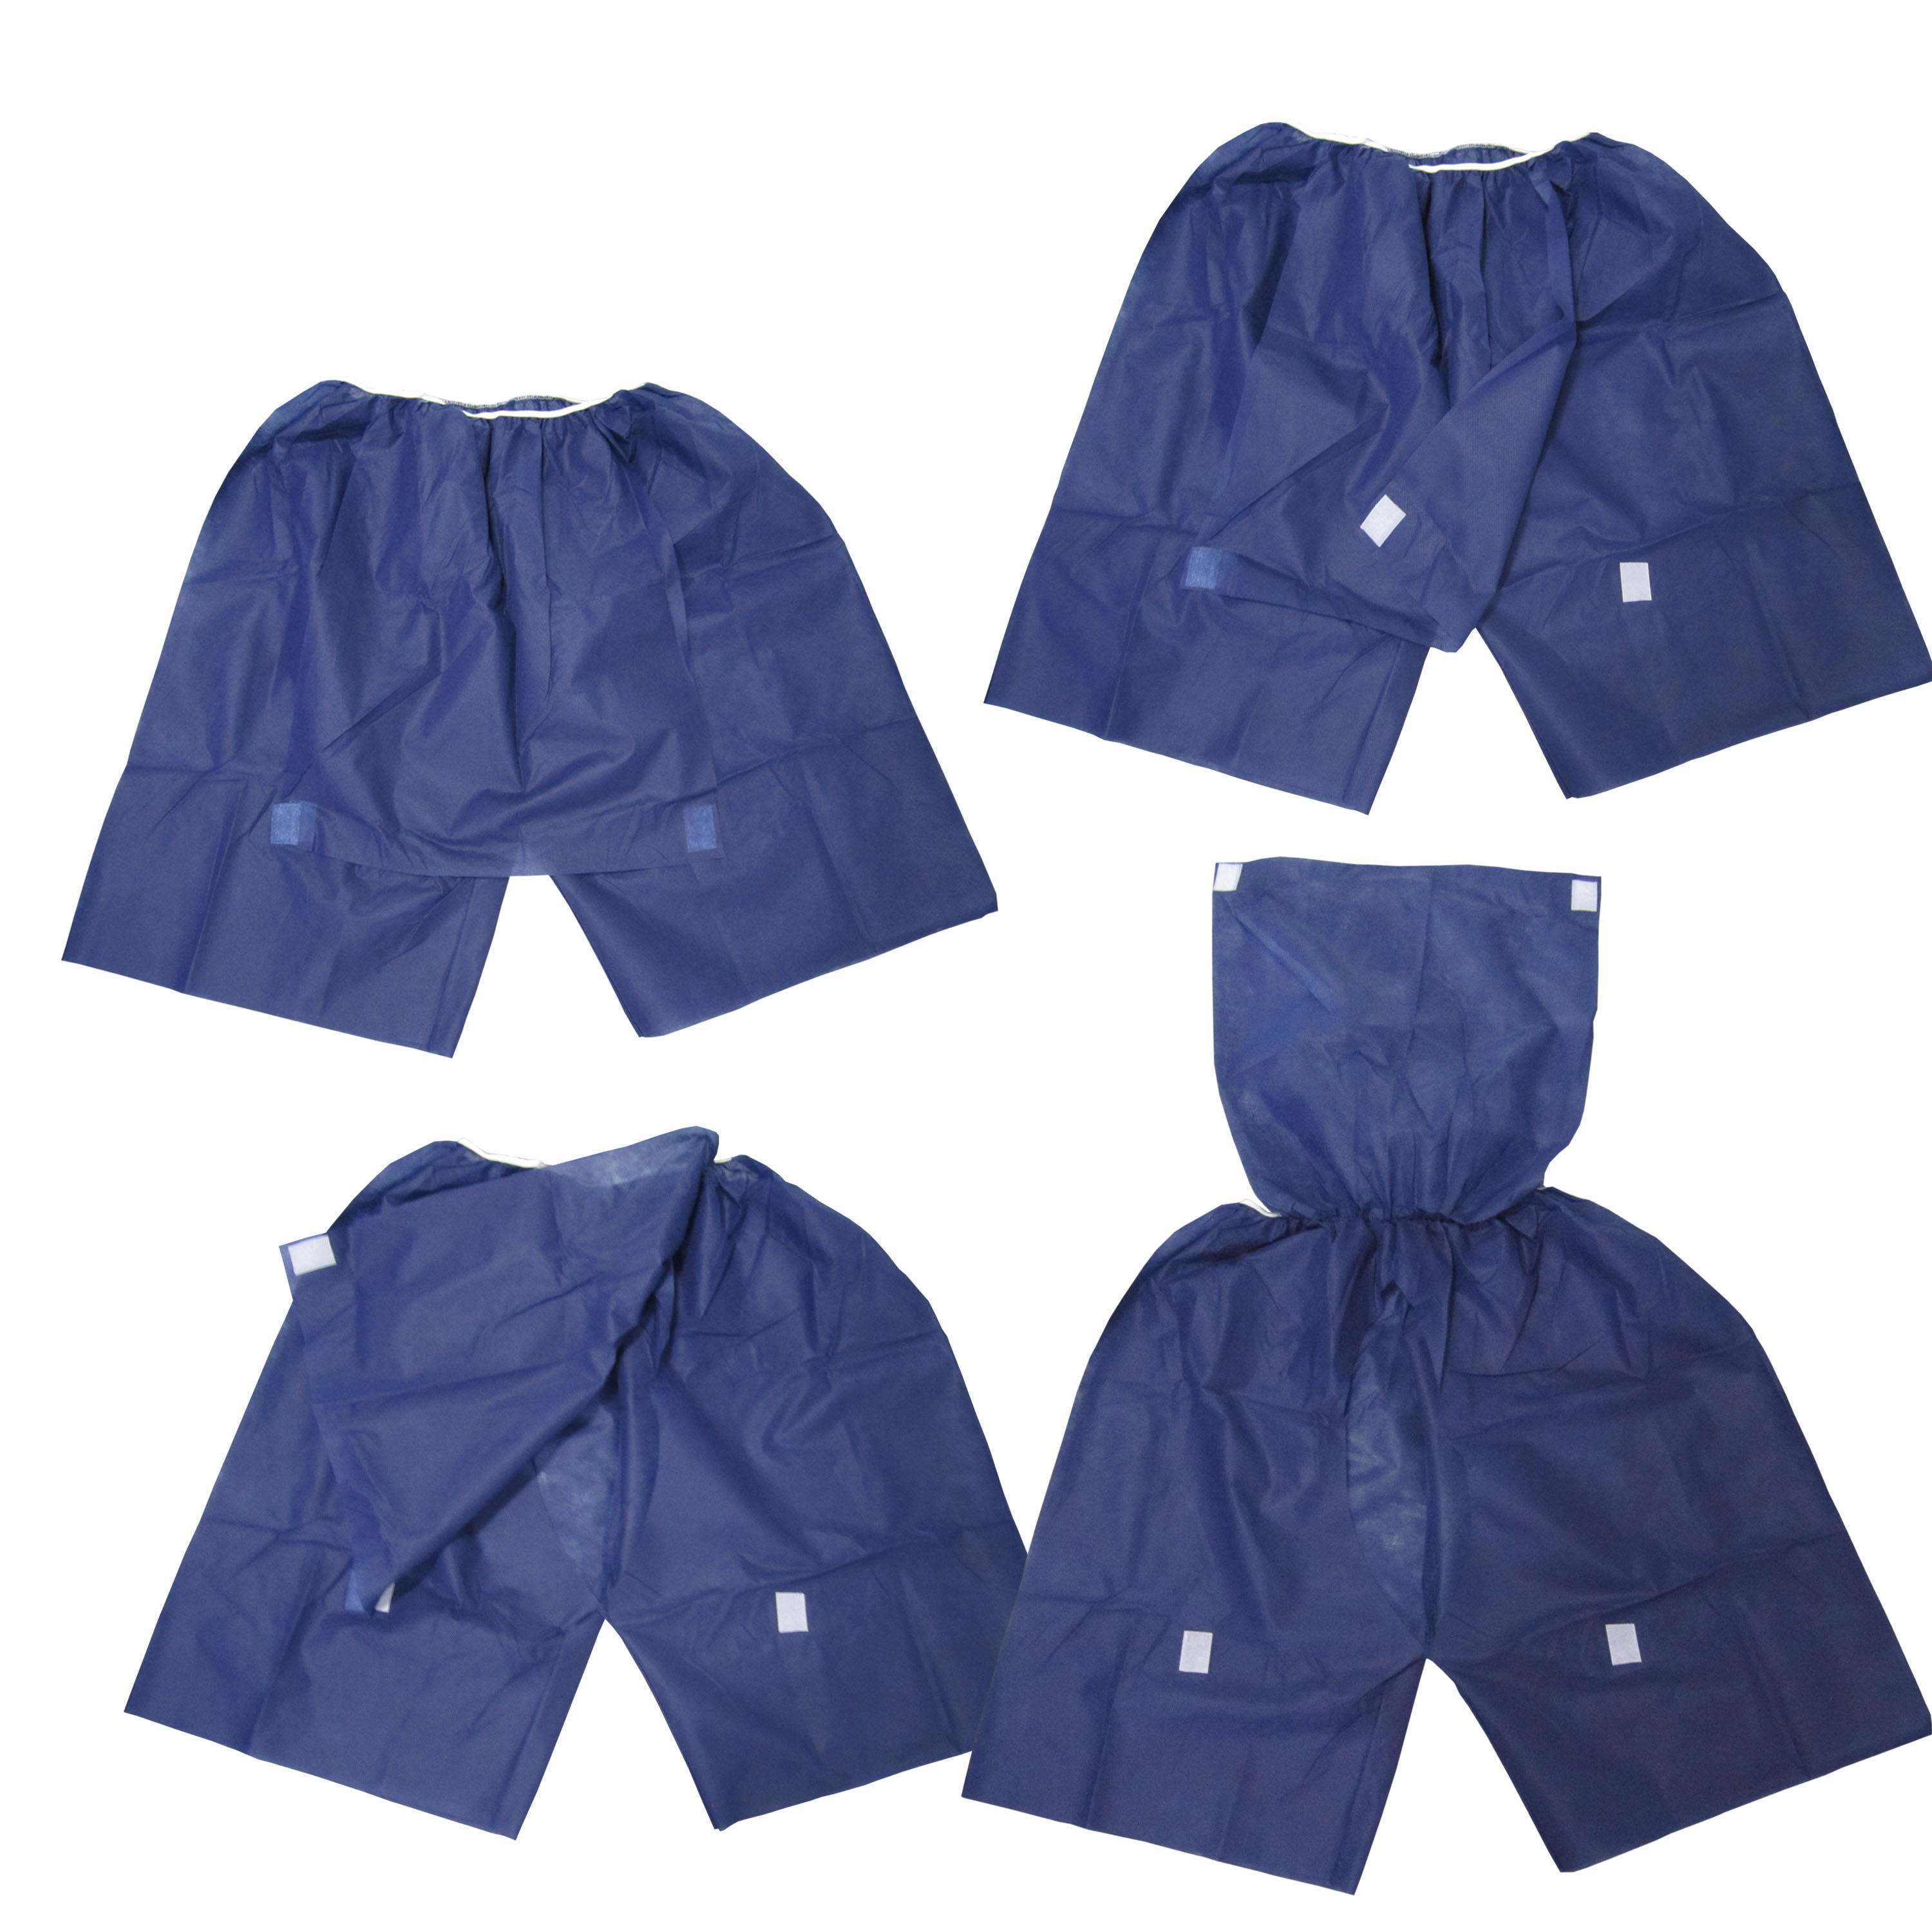 SMS 50g azul oscuro tela no tejida médico colonoscopia paciente examen pantalones cortos ropa interior desechable pantalones para adultos